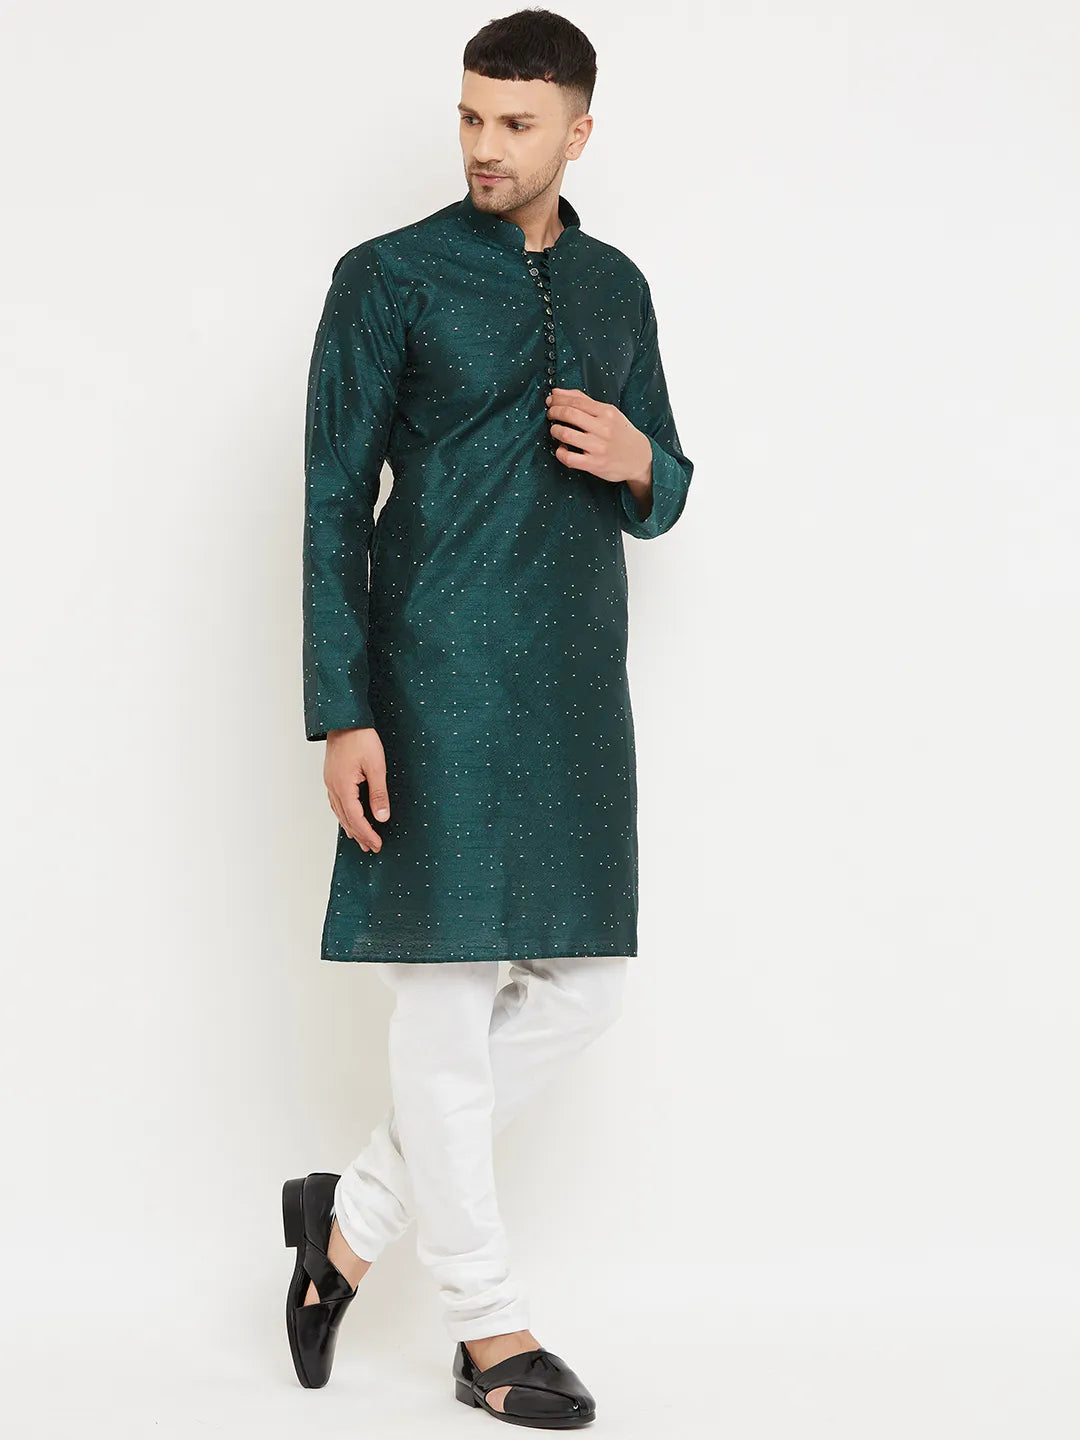 How Do I Wear a Salwar Kameez? | DESIblitz